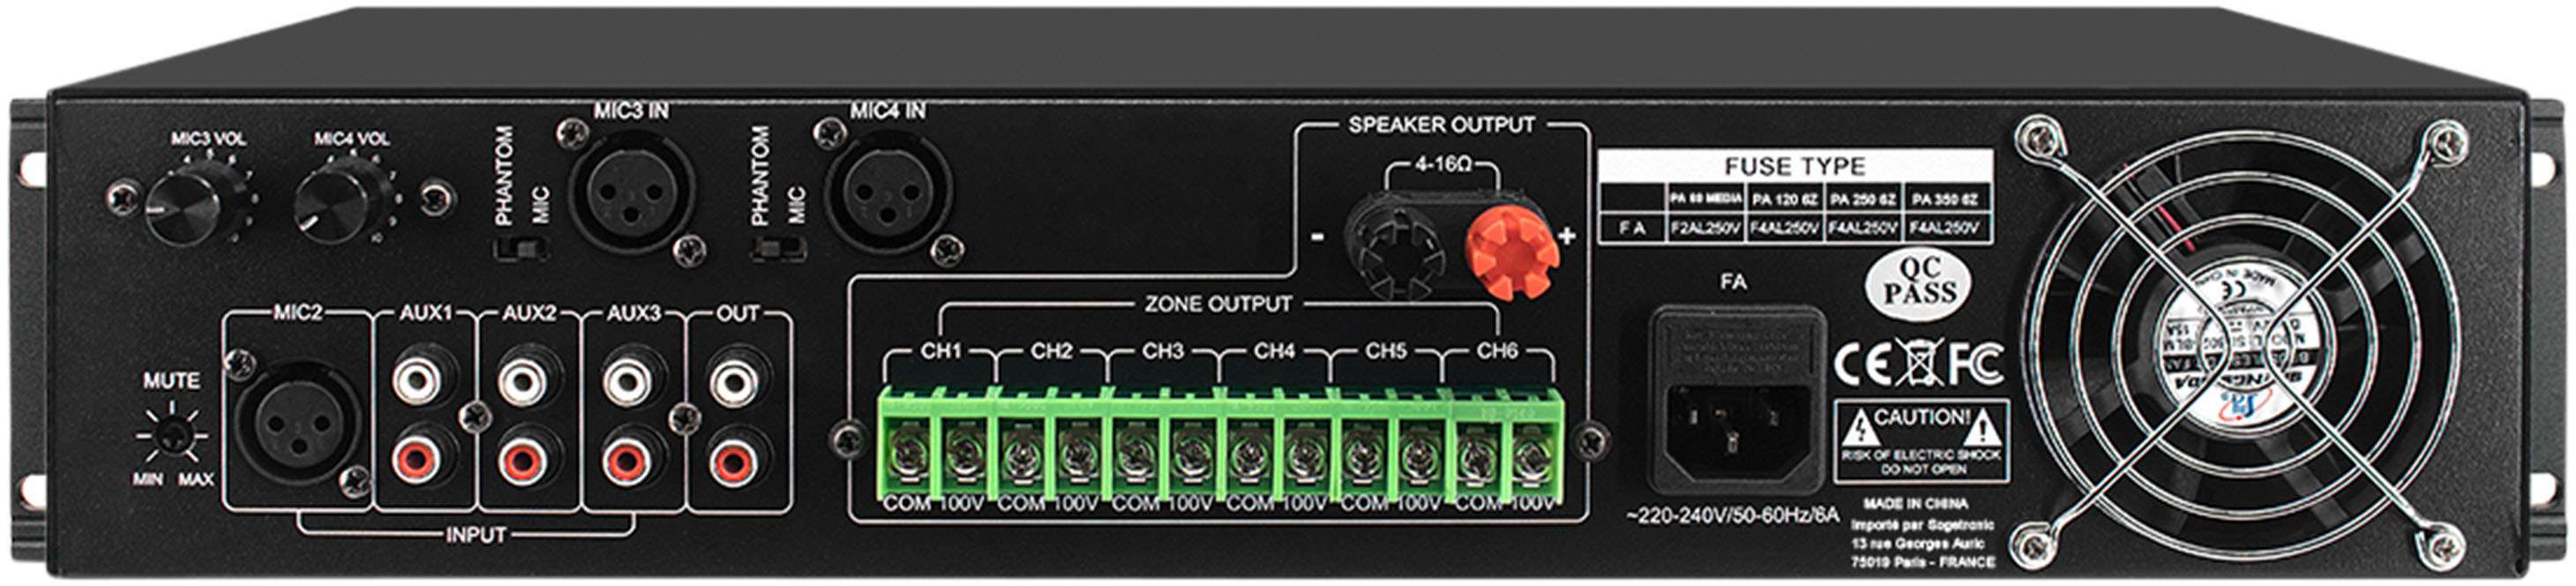 Definitive Audio Pa 250 6z - Multi-kanalen krachtversterker - Variation 1